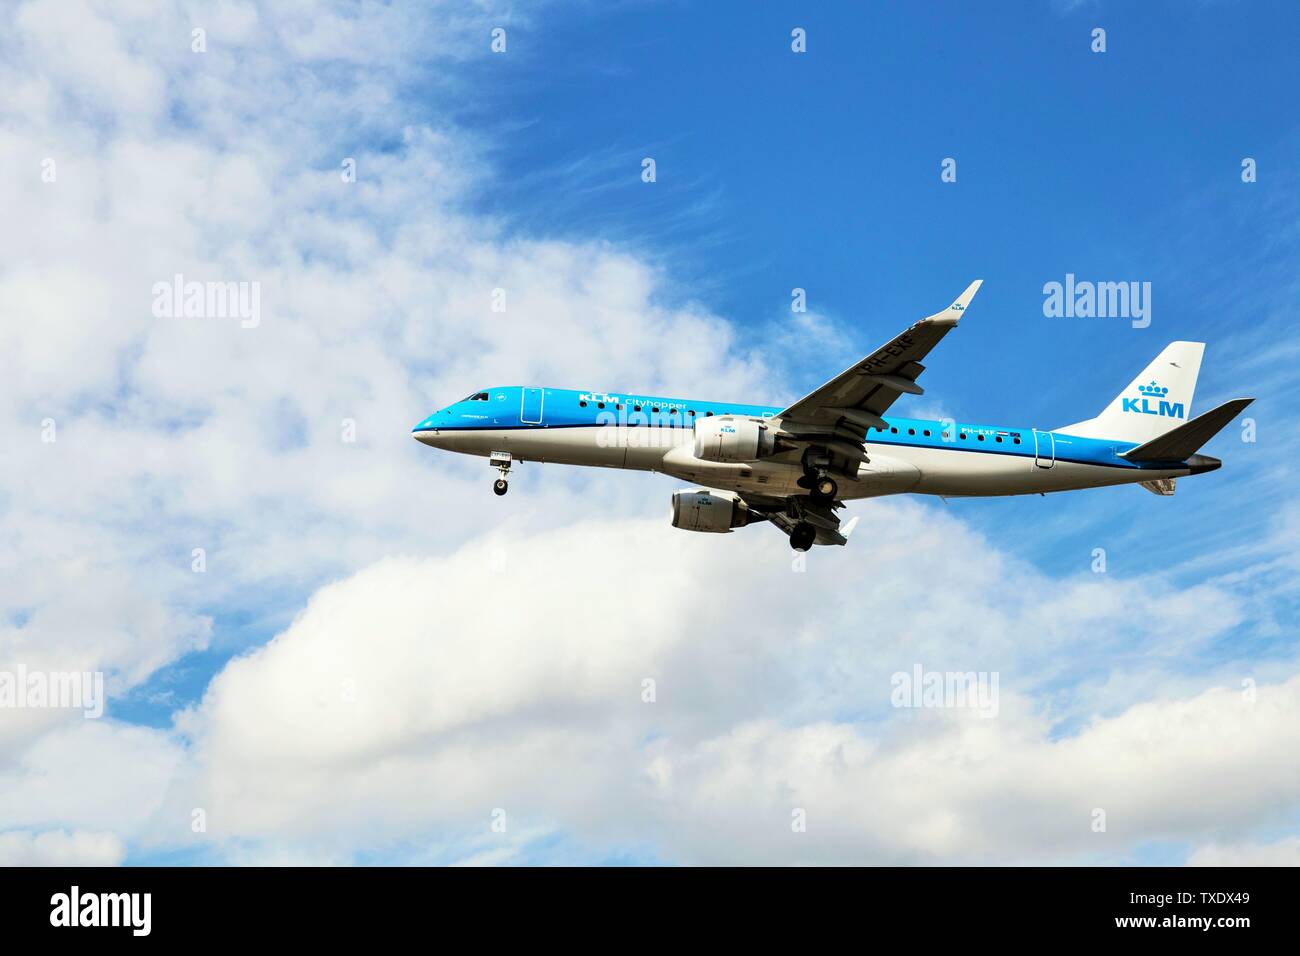 KLM Royal Dutch Airlines of Netherlands aeroplane landing at London, UK Stock Photo